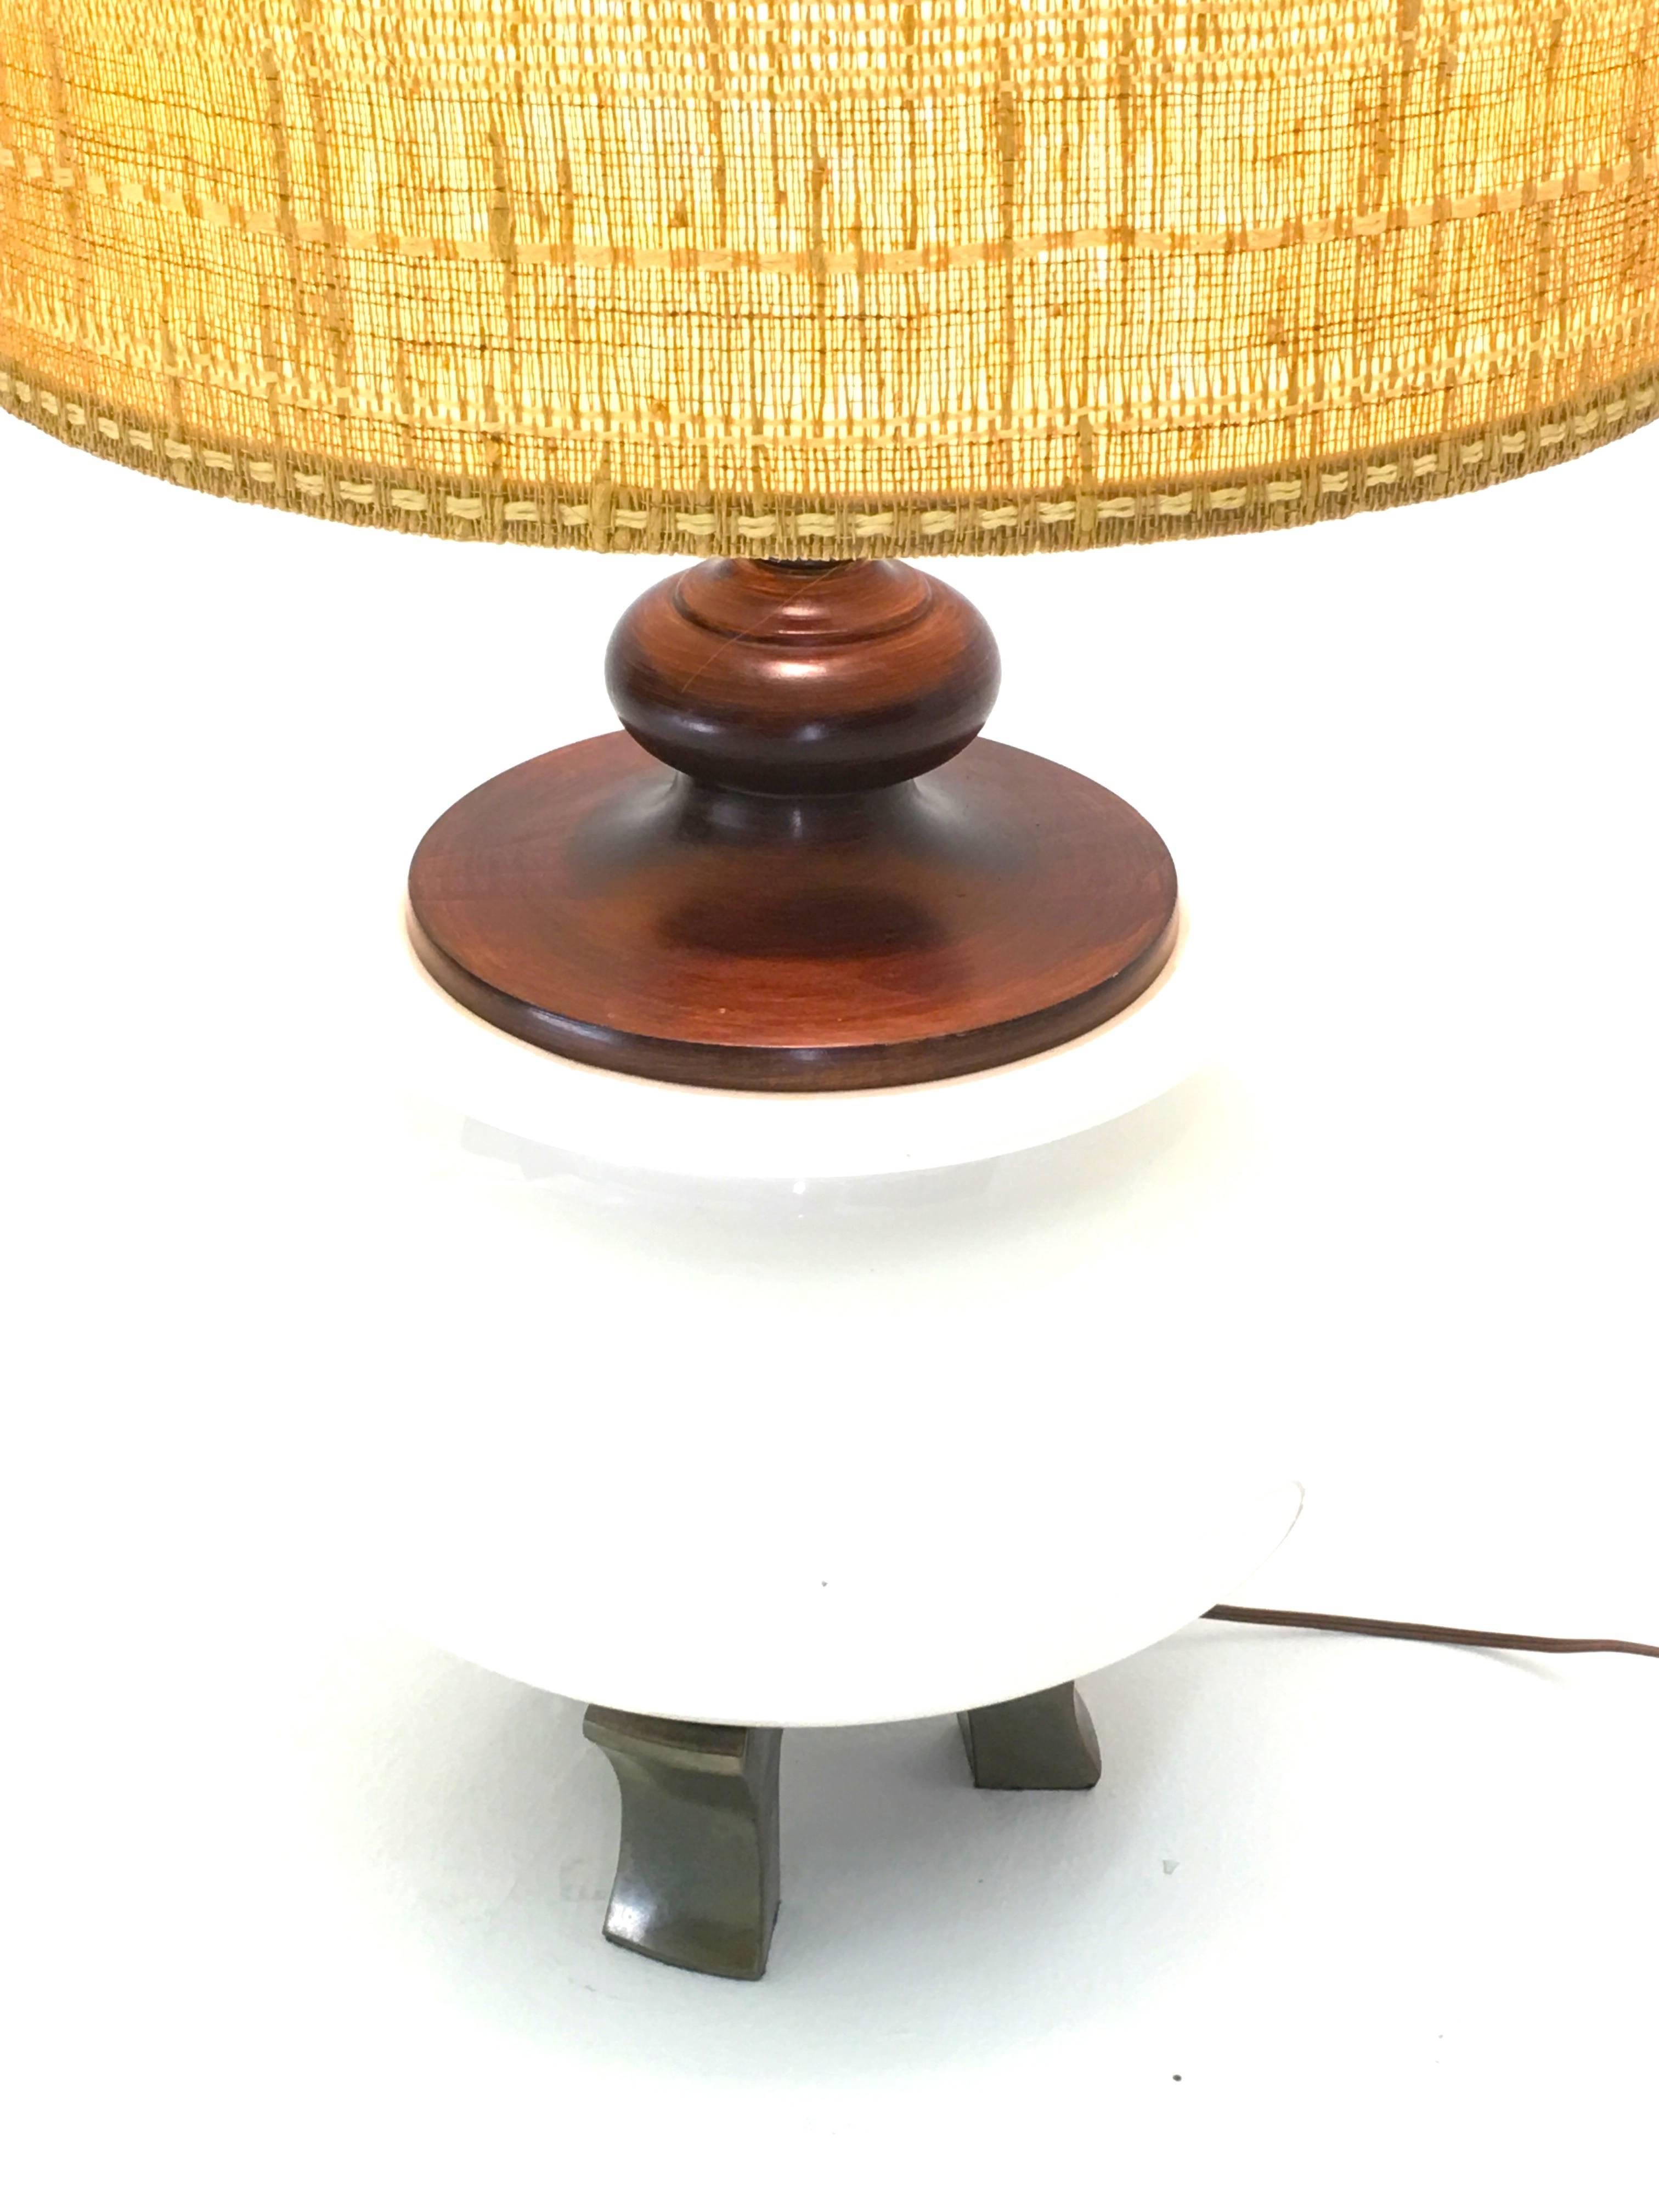 American Large Jardiniere Chinoiserie Table Lamp by Morris Greenspan